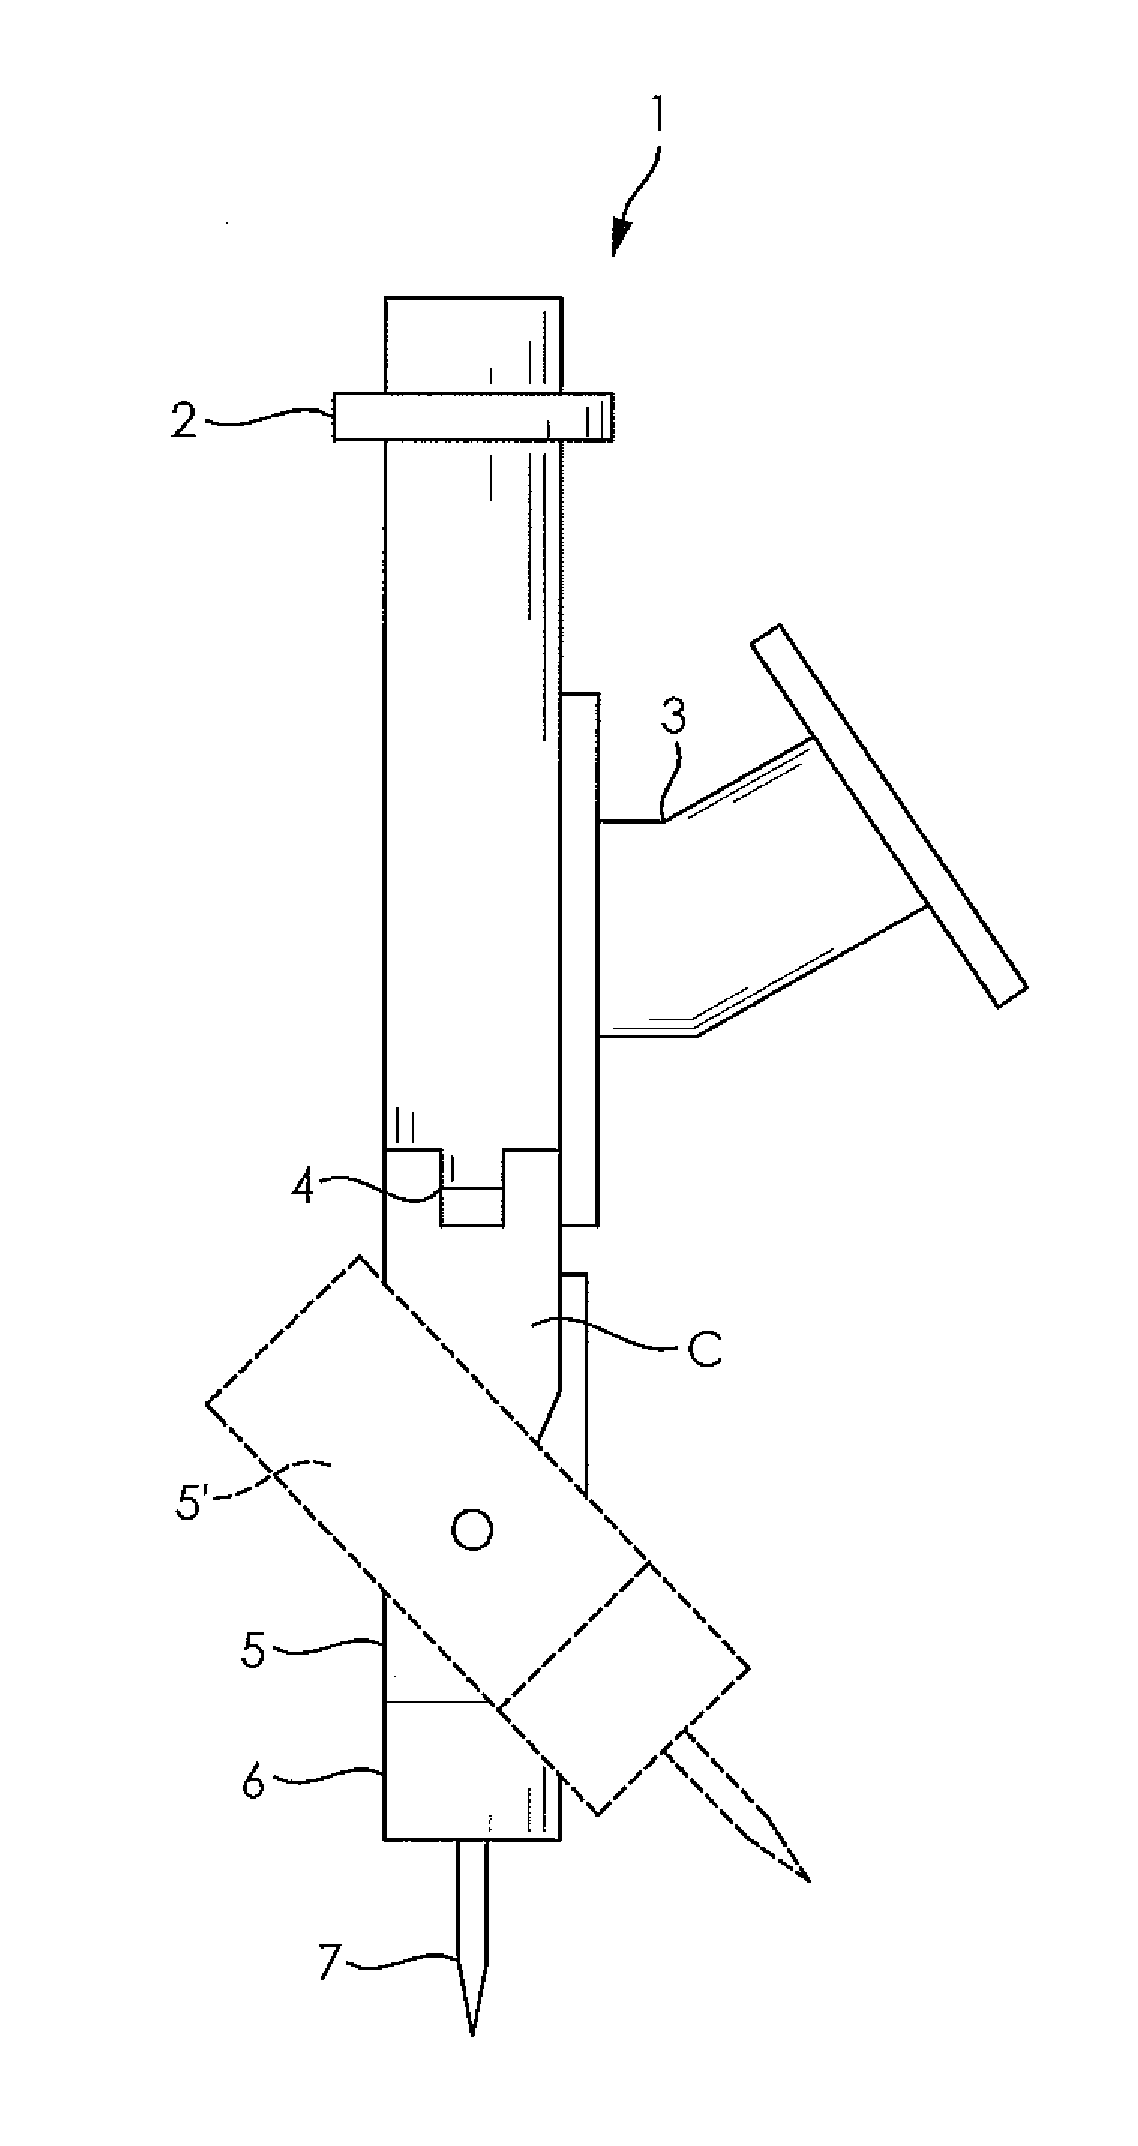 Robotic cartridge dispenser and method